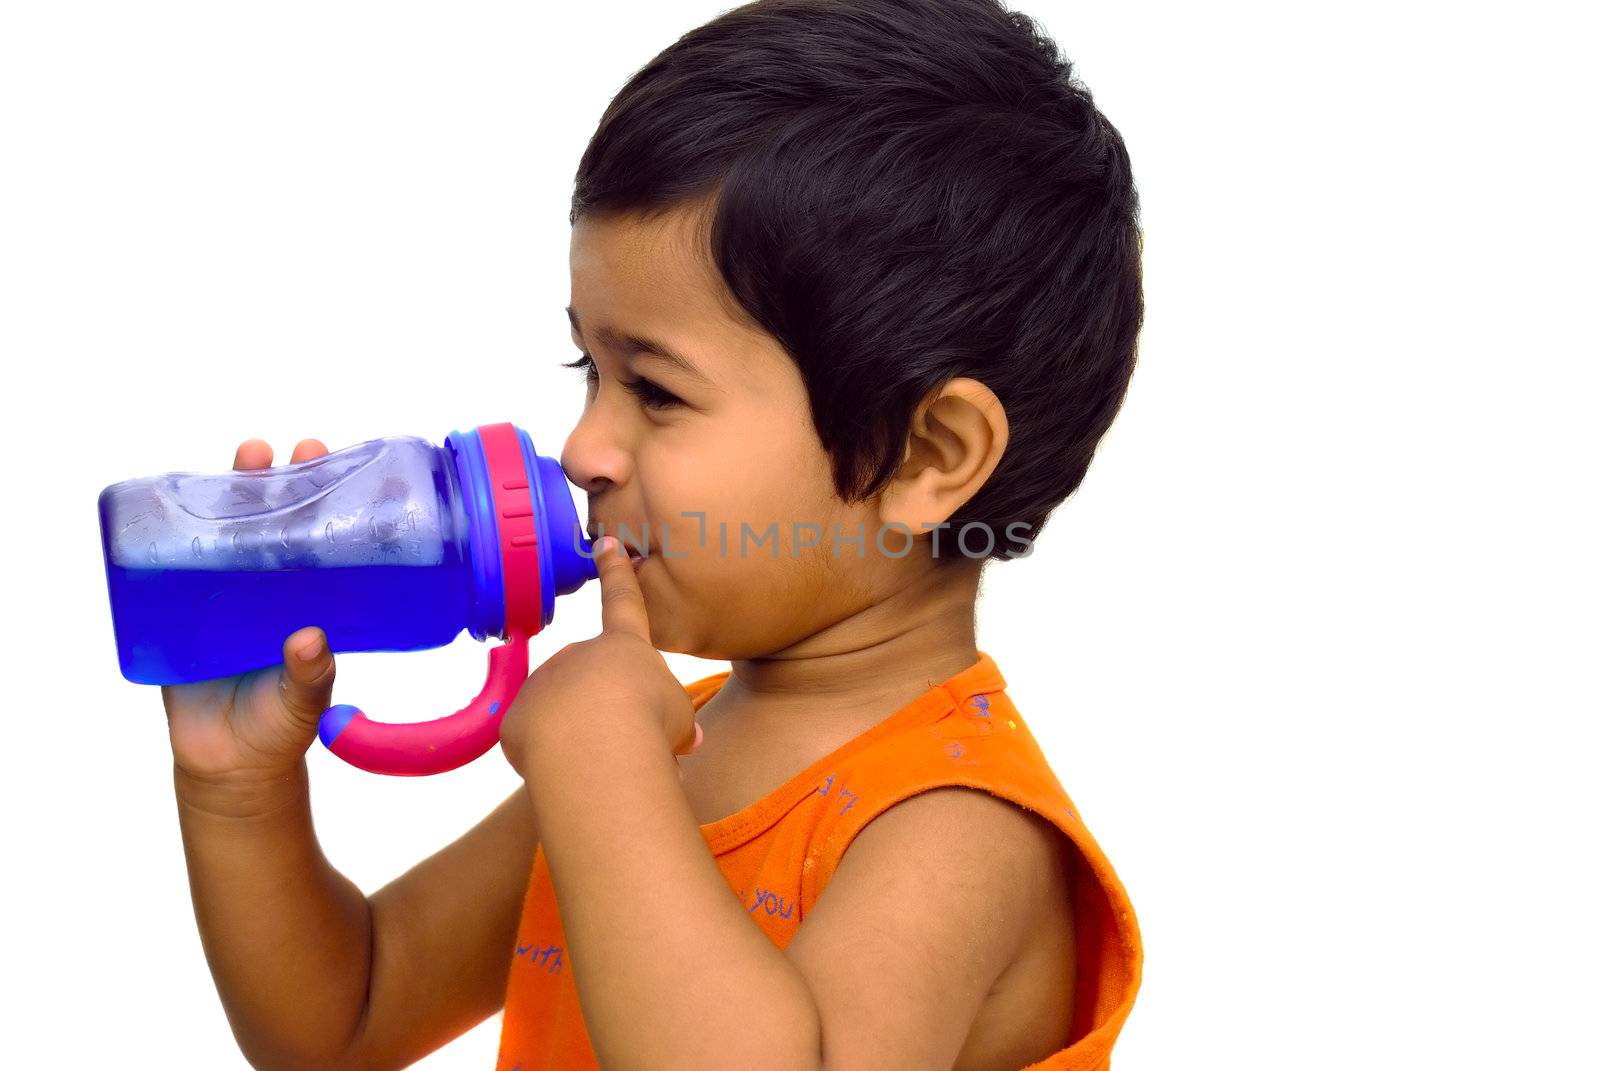 An handsome indian kid having fun drinking juice